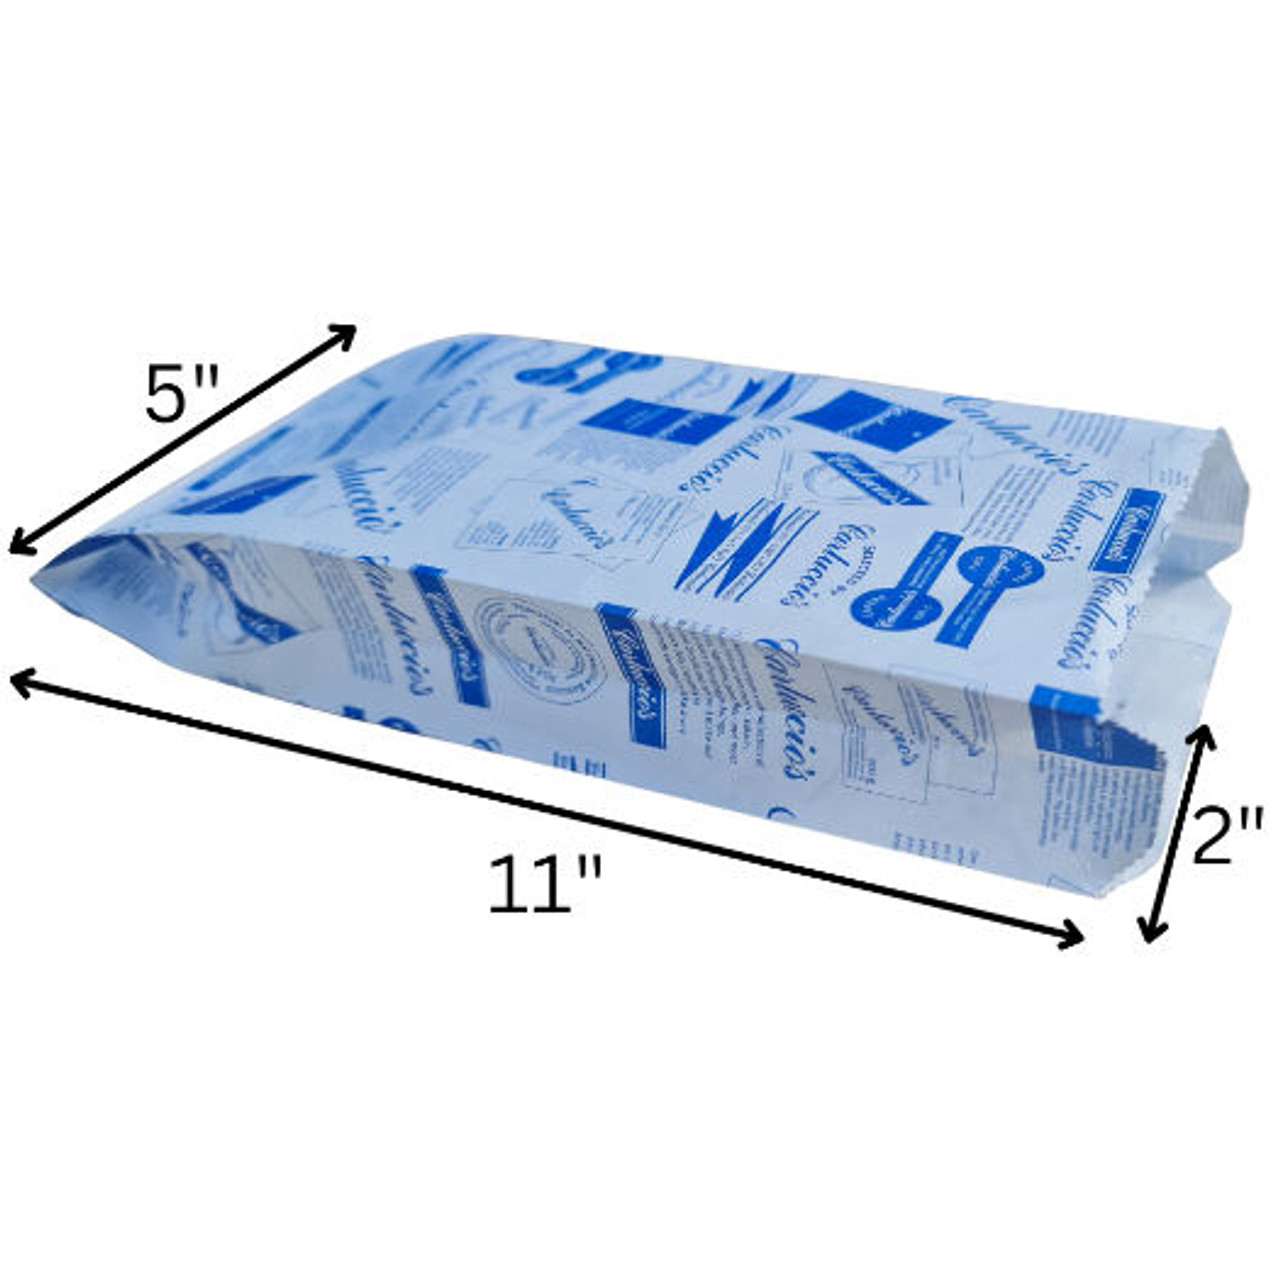 1,000 - 5"x 7"x 11" white Quality Kraft paper bags Printed 'Calluccios'